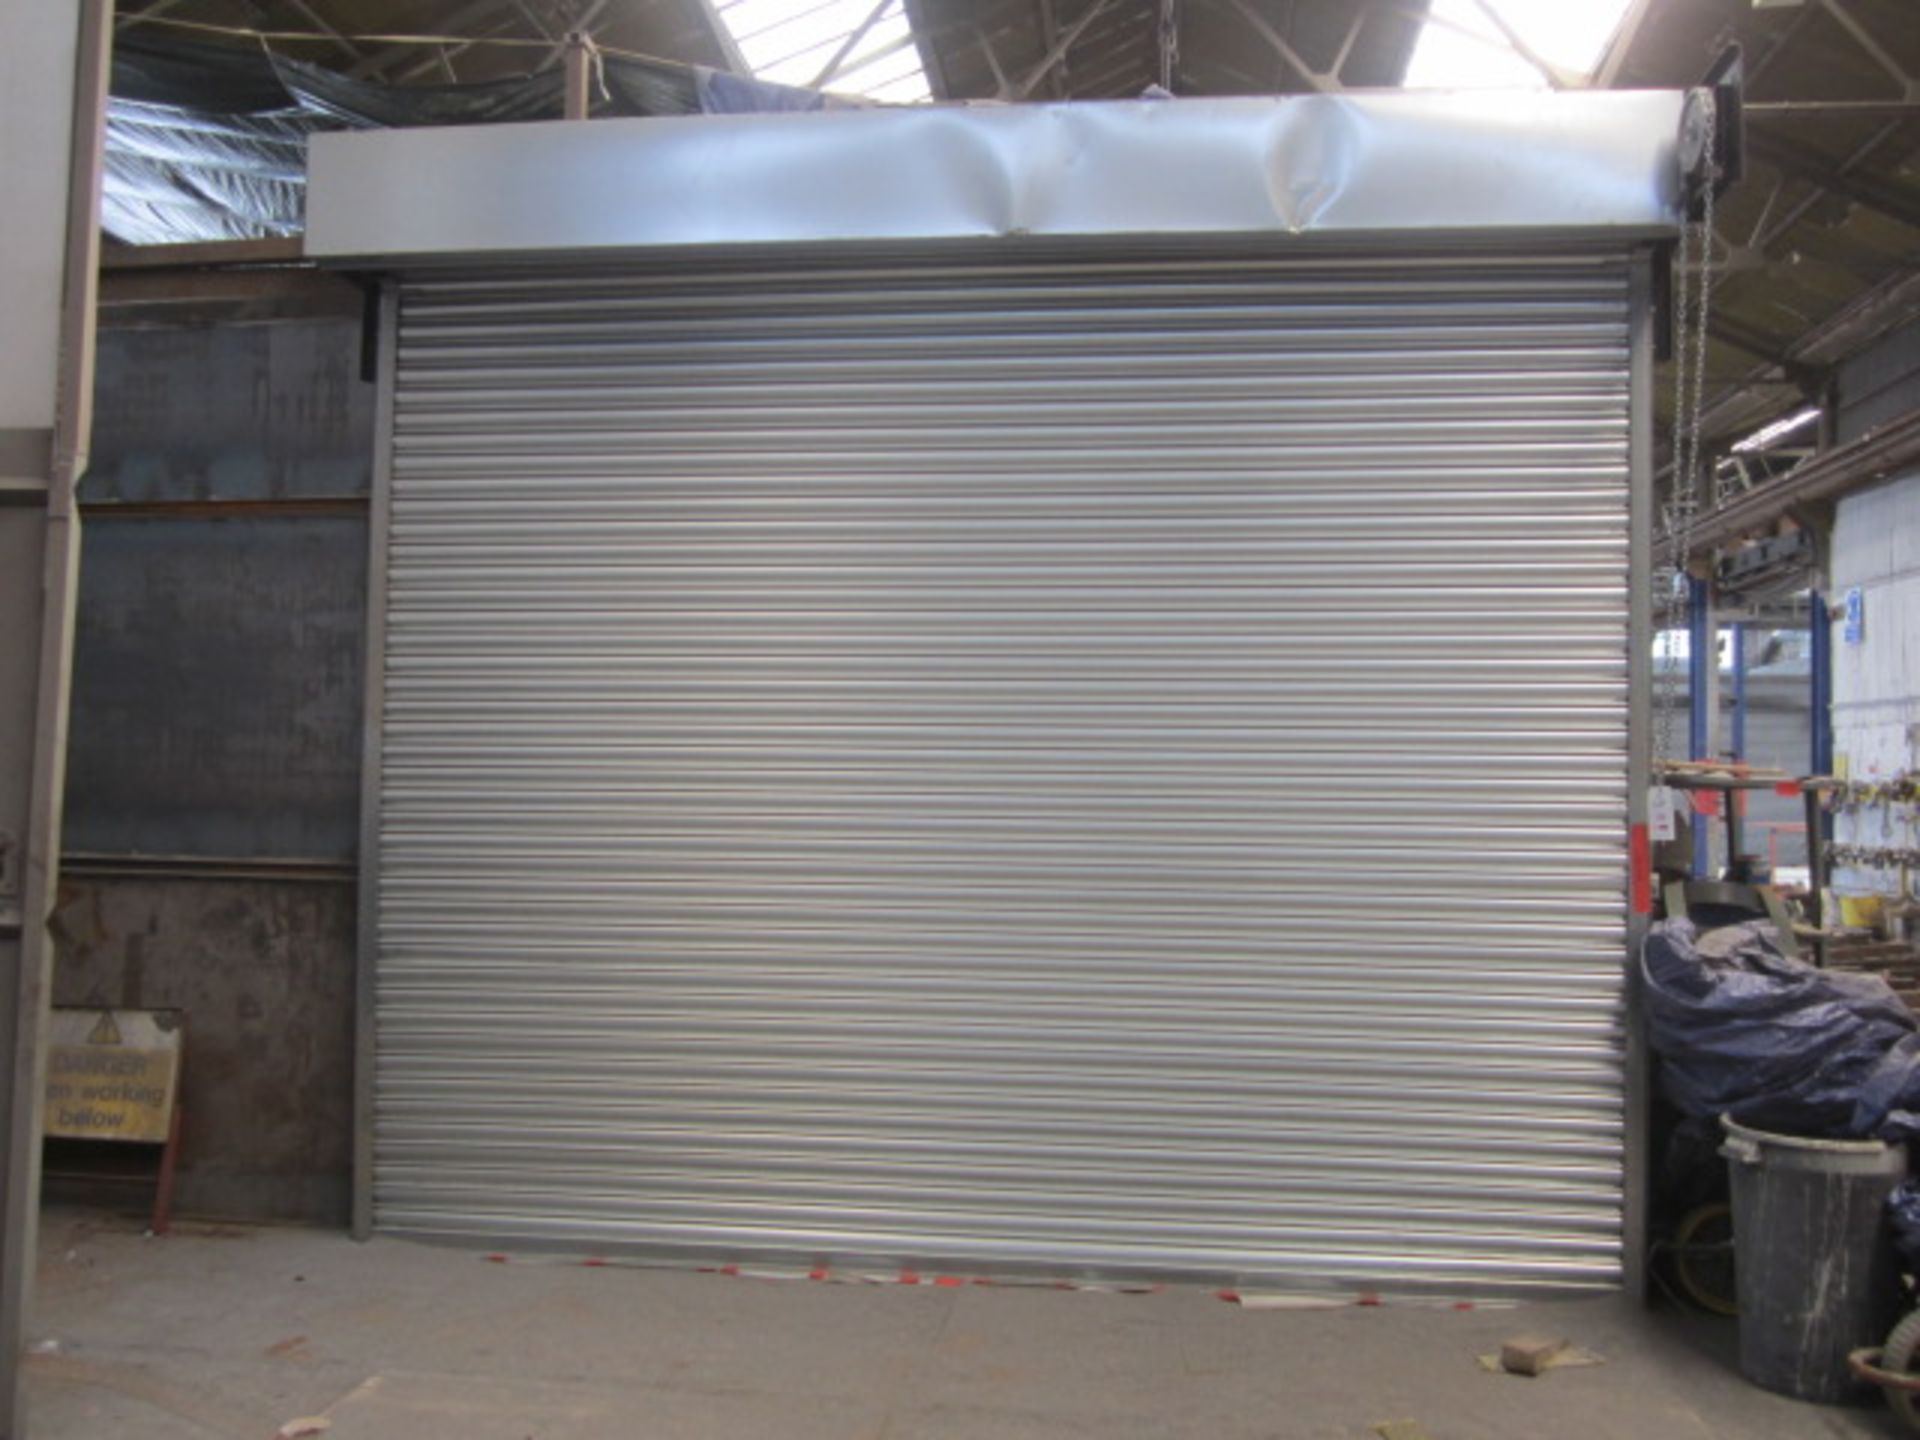 One steel framed wall mounted, manual operated roller shutter door (wheel & chain), door